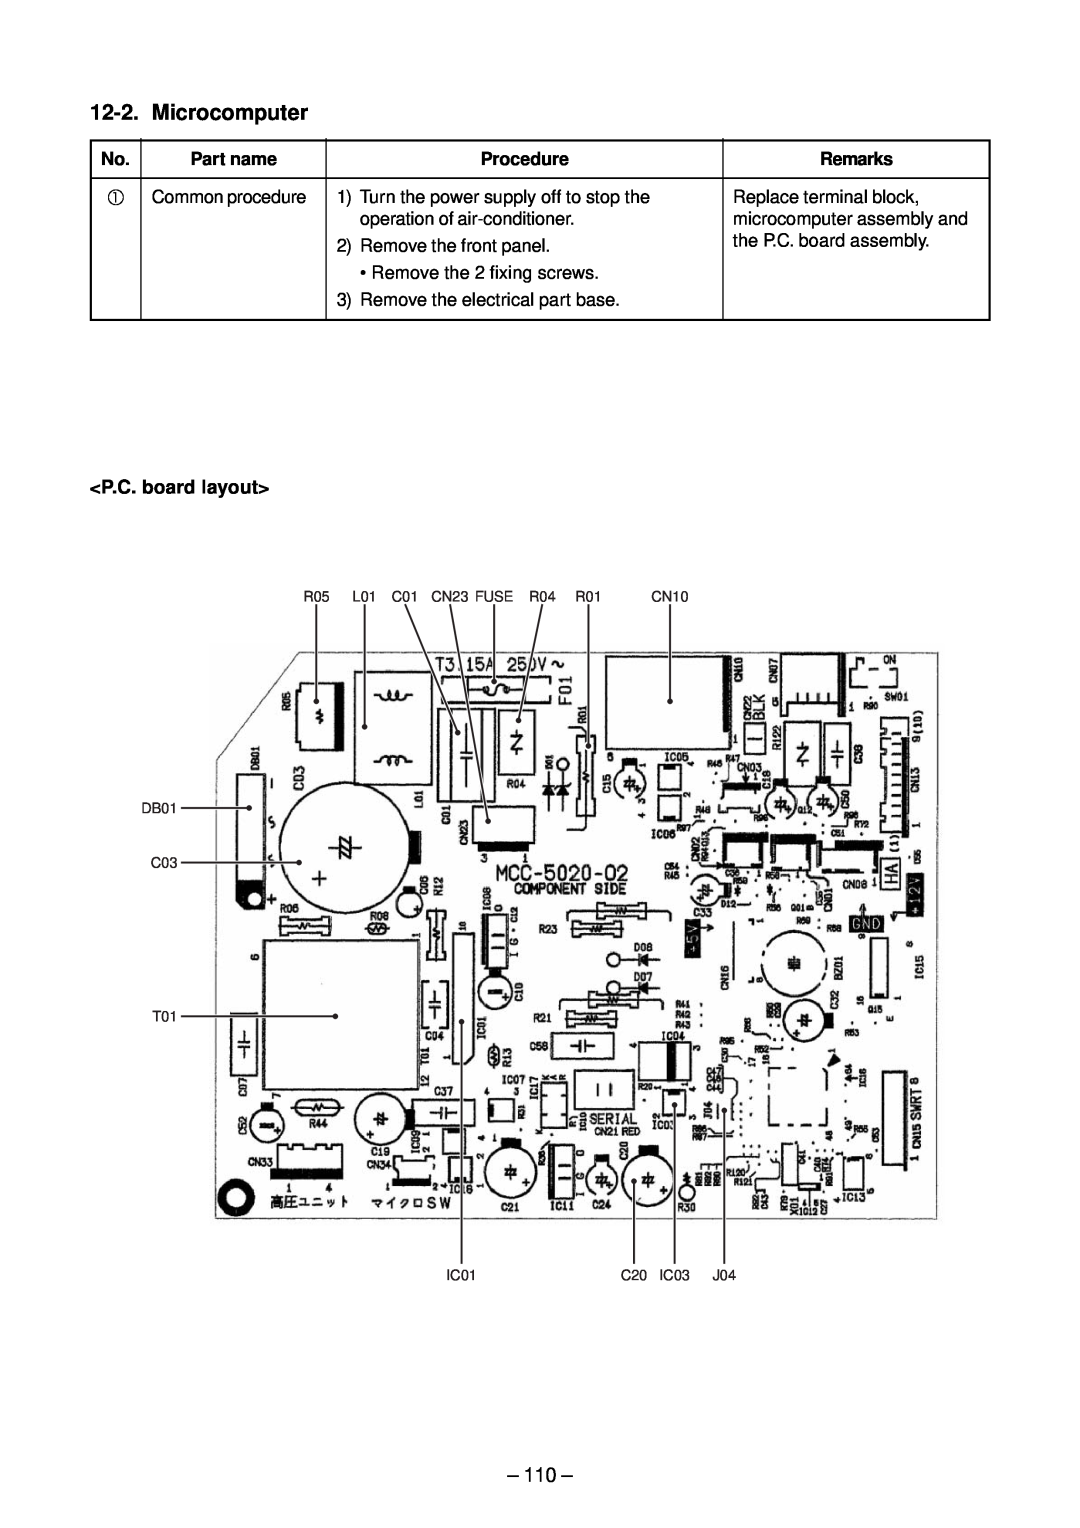 Toshiba RAS-M14EACV-E, RAS-M13EKCVP-E, RAS-M18EACV-E, RAS-M16EKCVP-E 12-2, Microcomputer, 110, P.C. board layout 